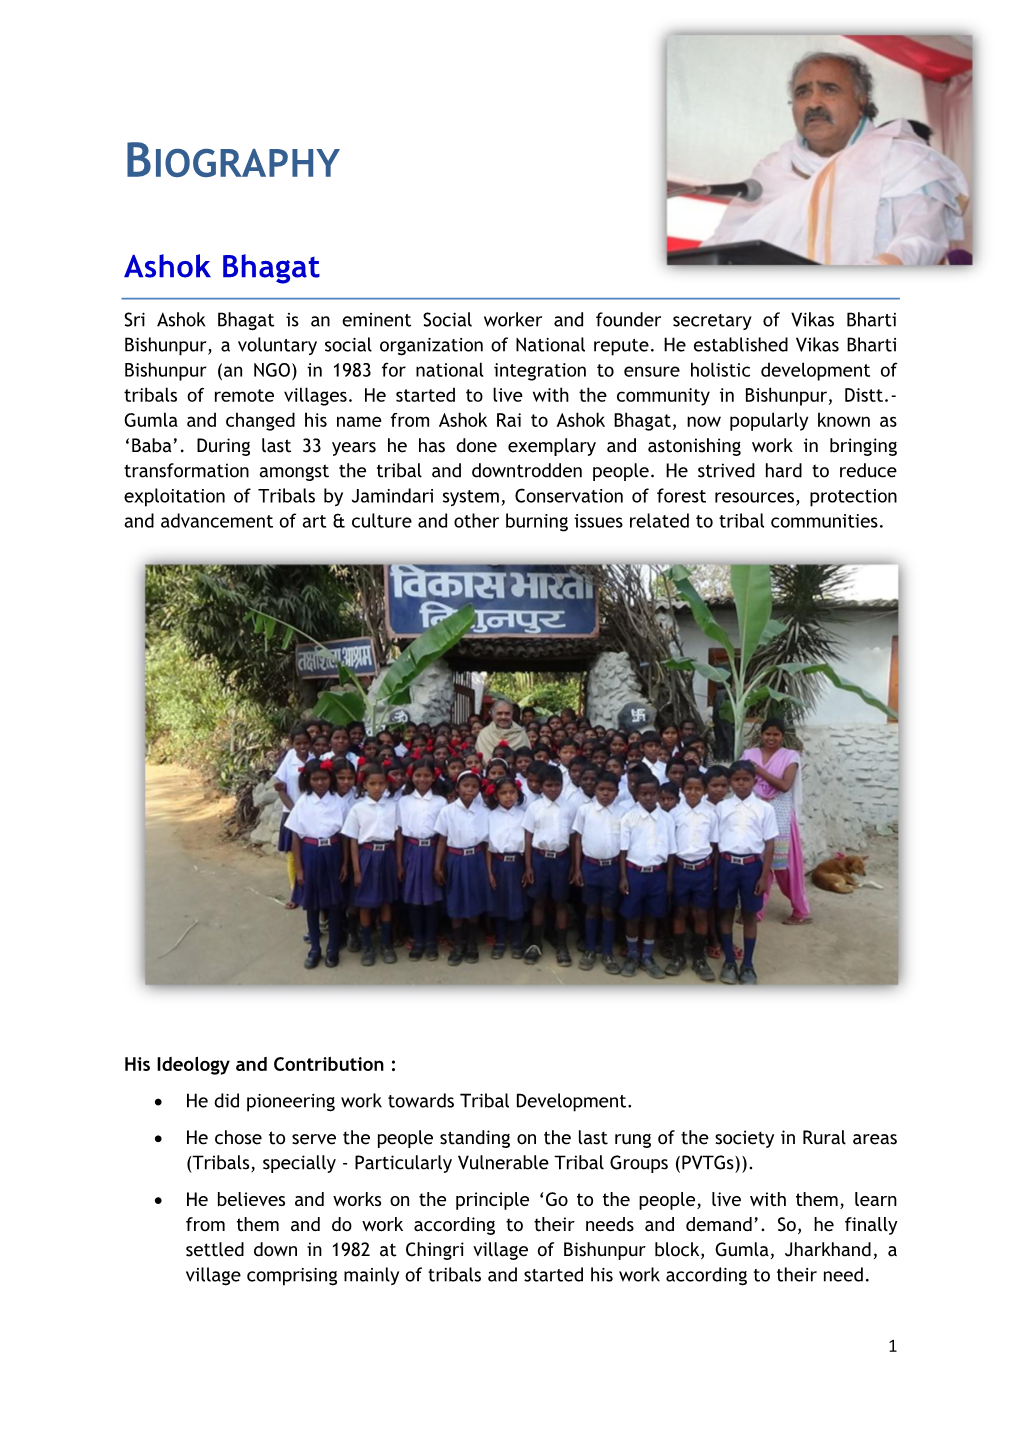 Ashok Bhagat Biography